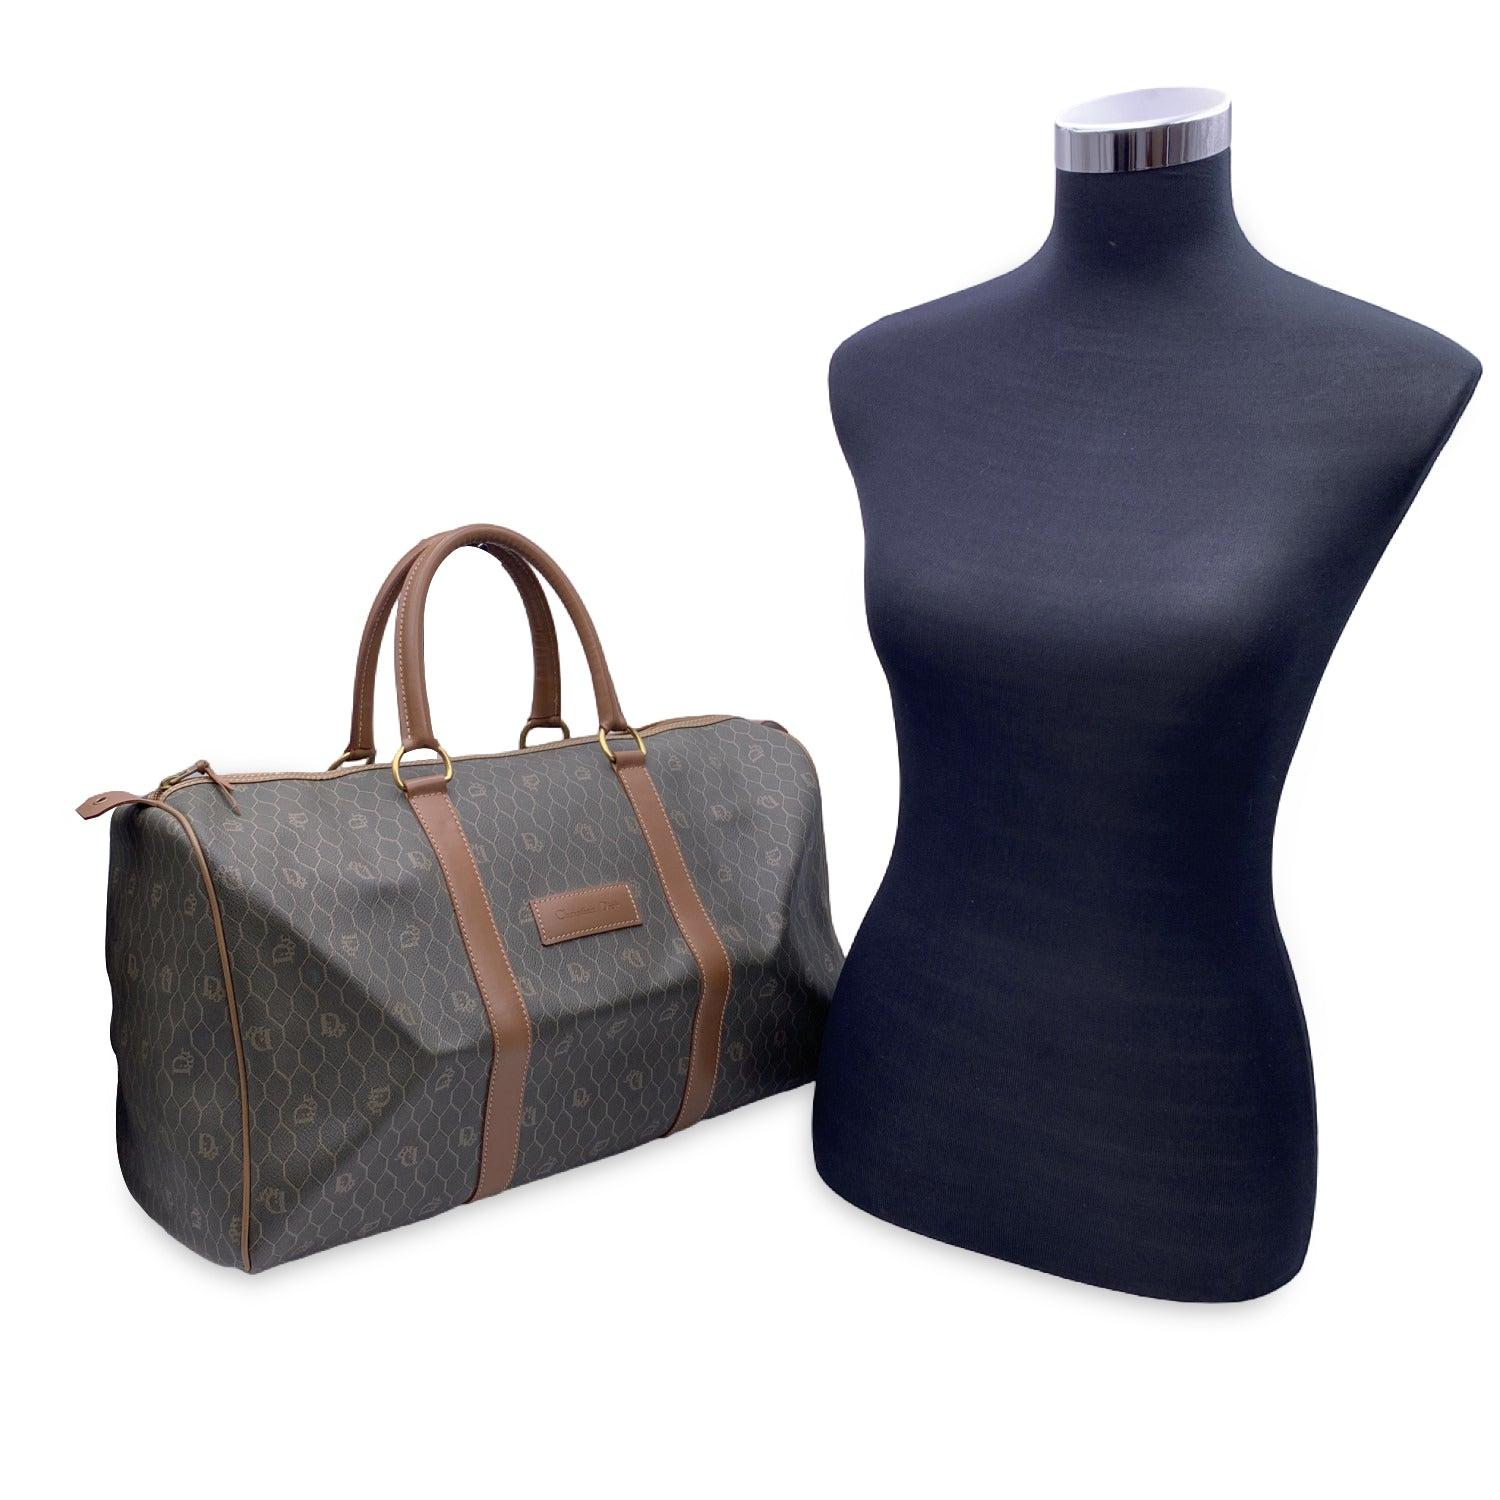 Retro Dior Travel Bag - 6 For Sale on 1stDibs